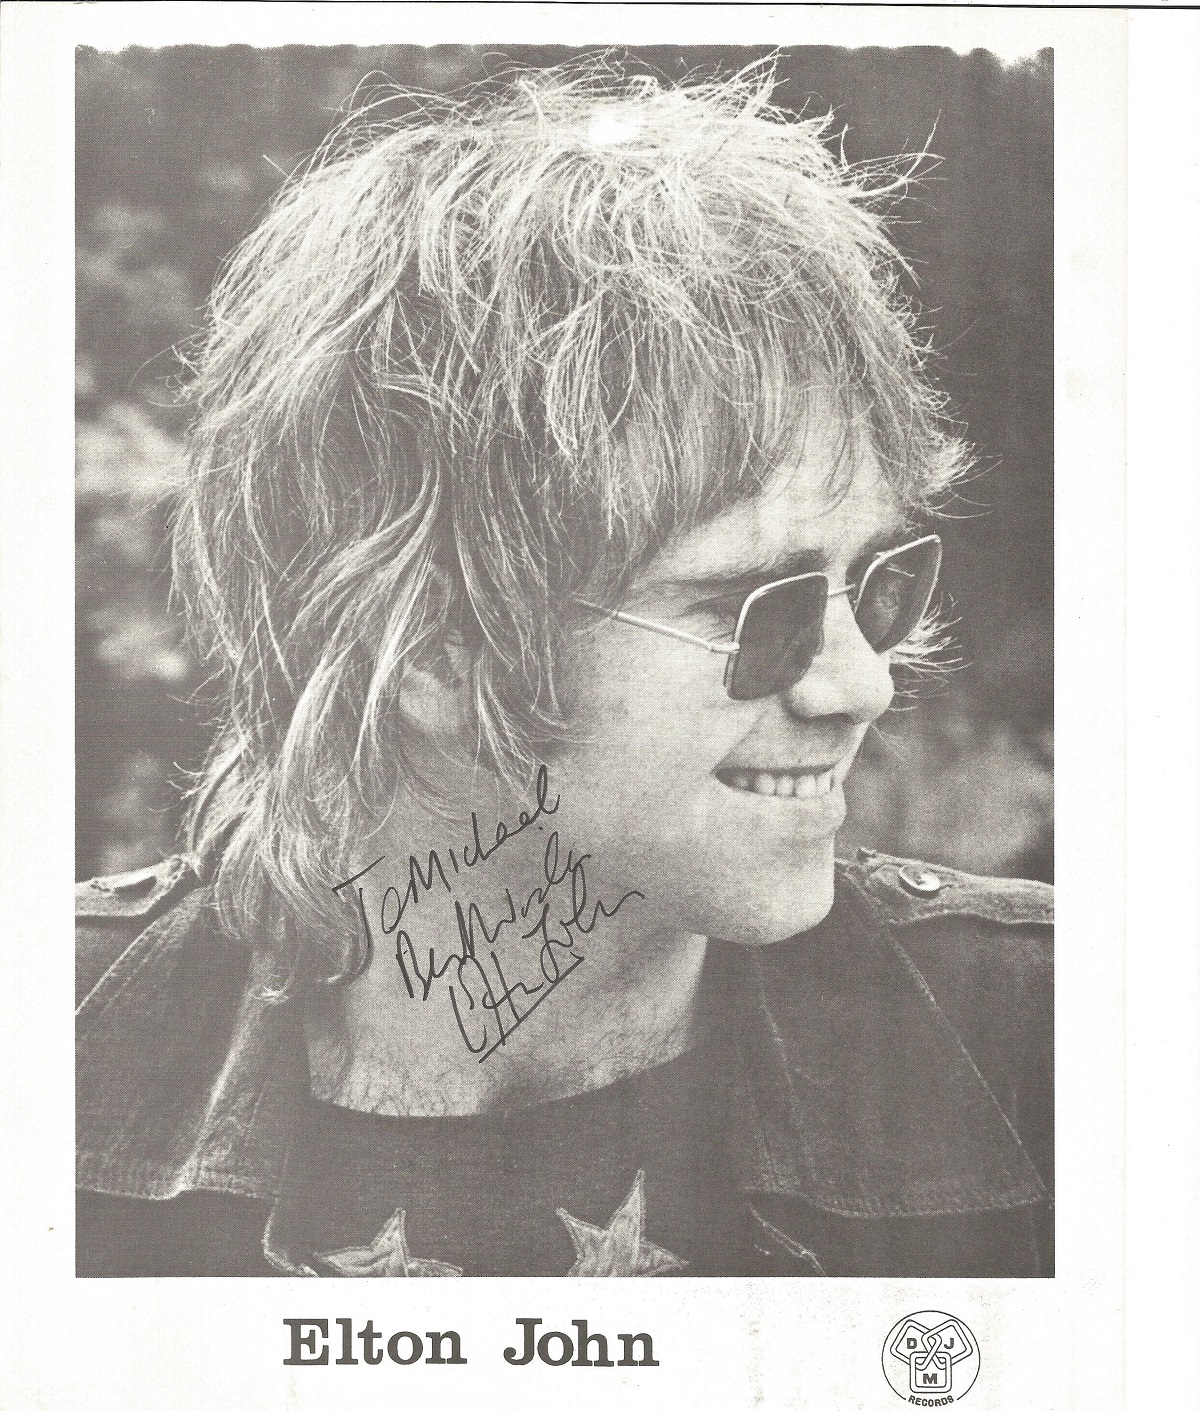 Elton John signed young 10 x 8 inch b/w matt photo to Michael. DLM records promo.